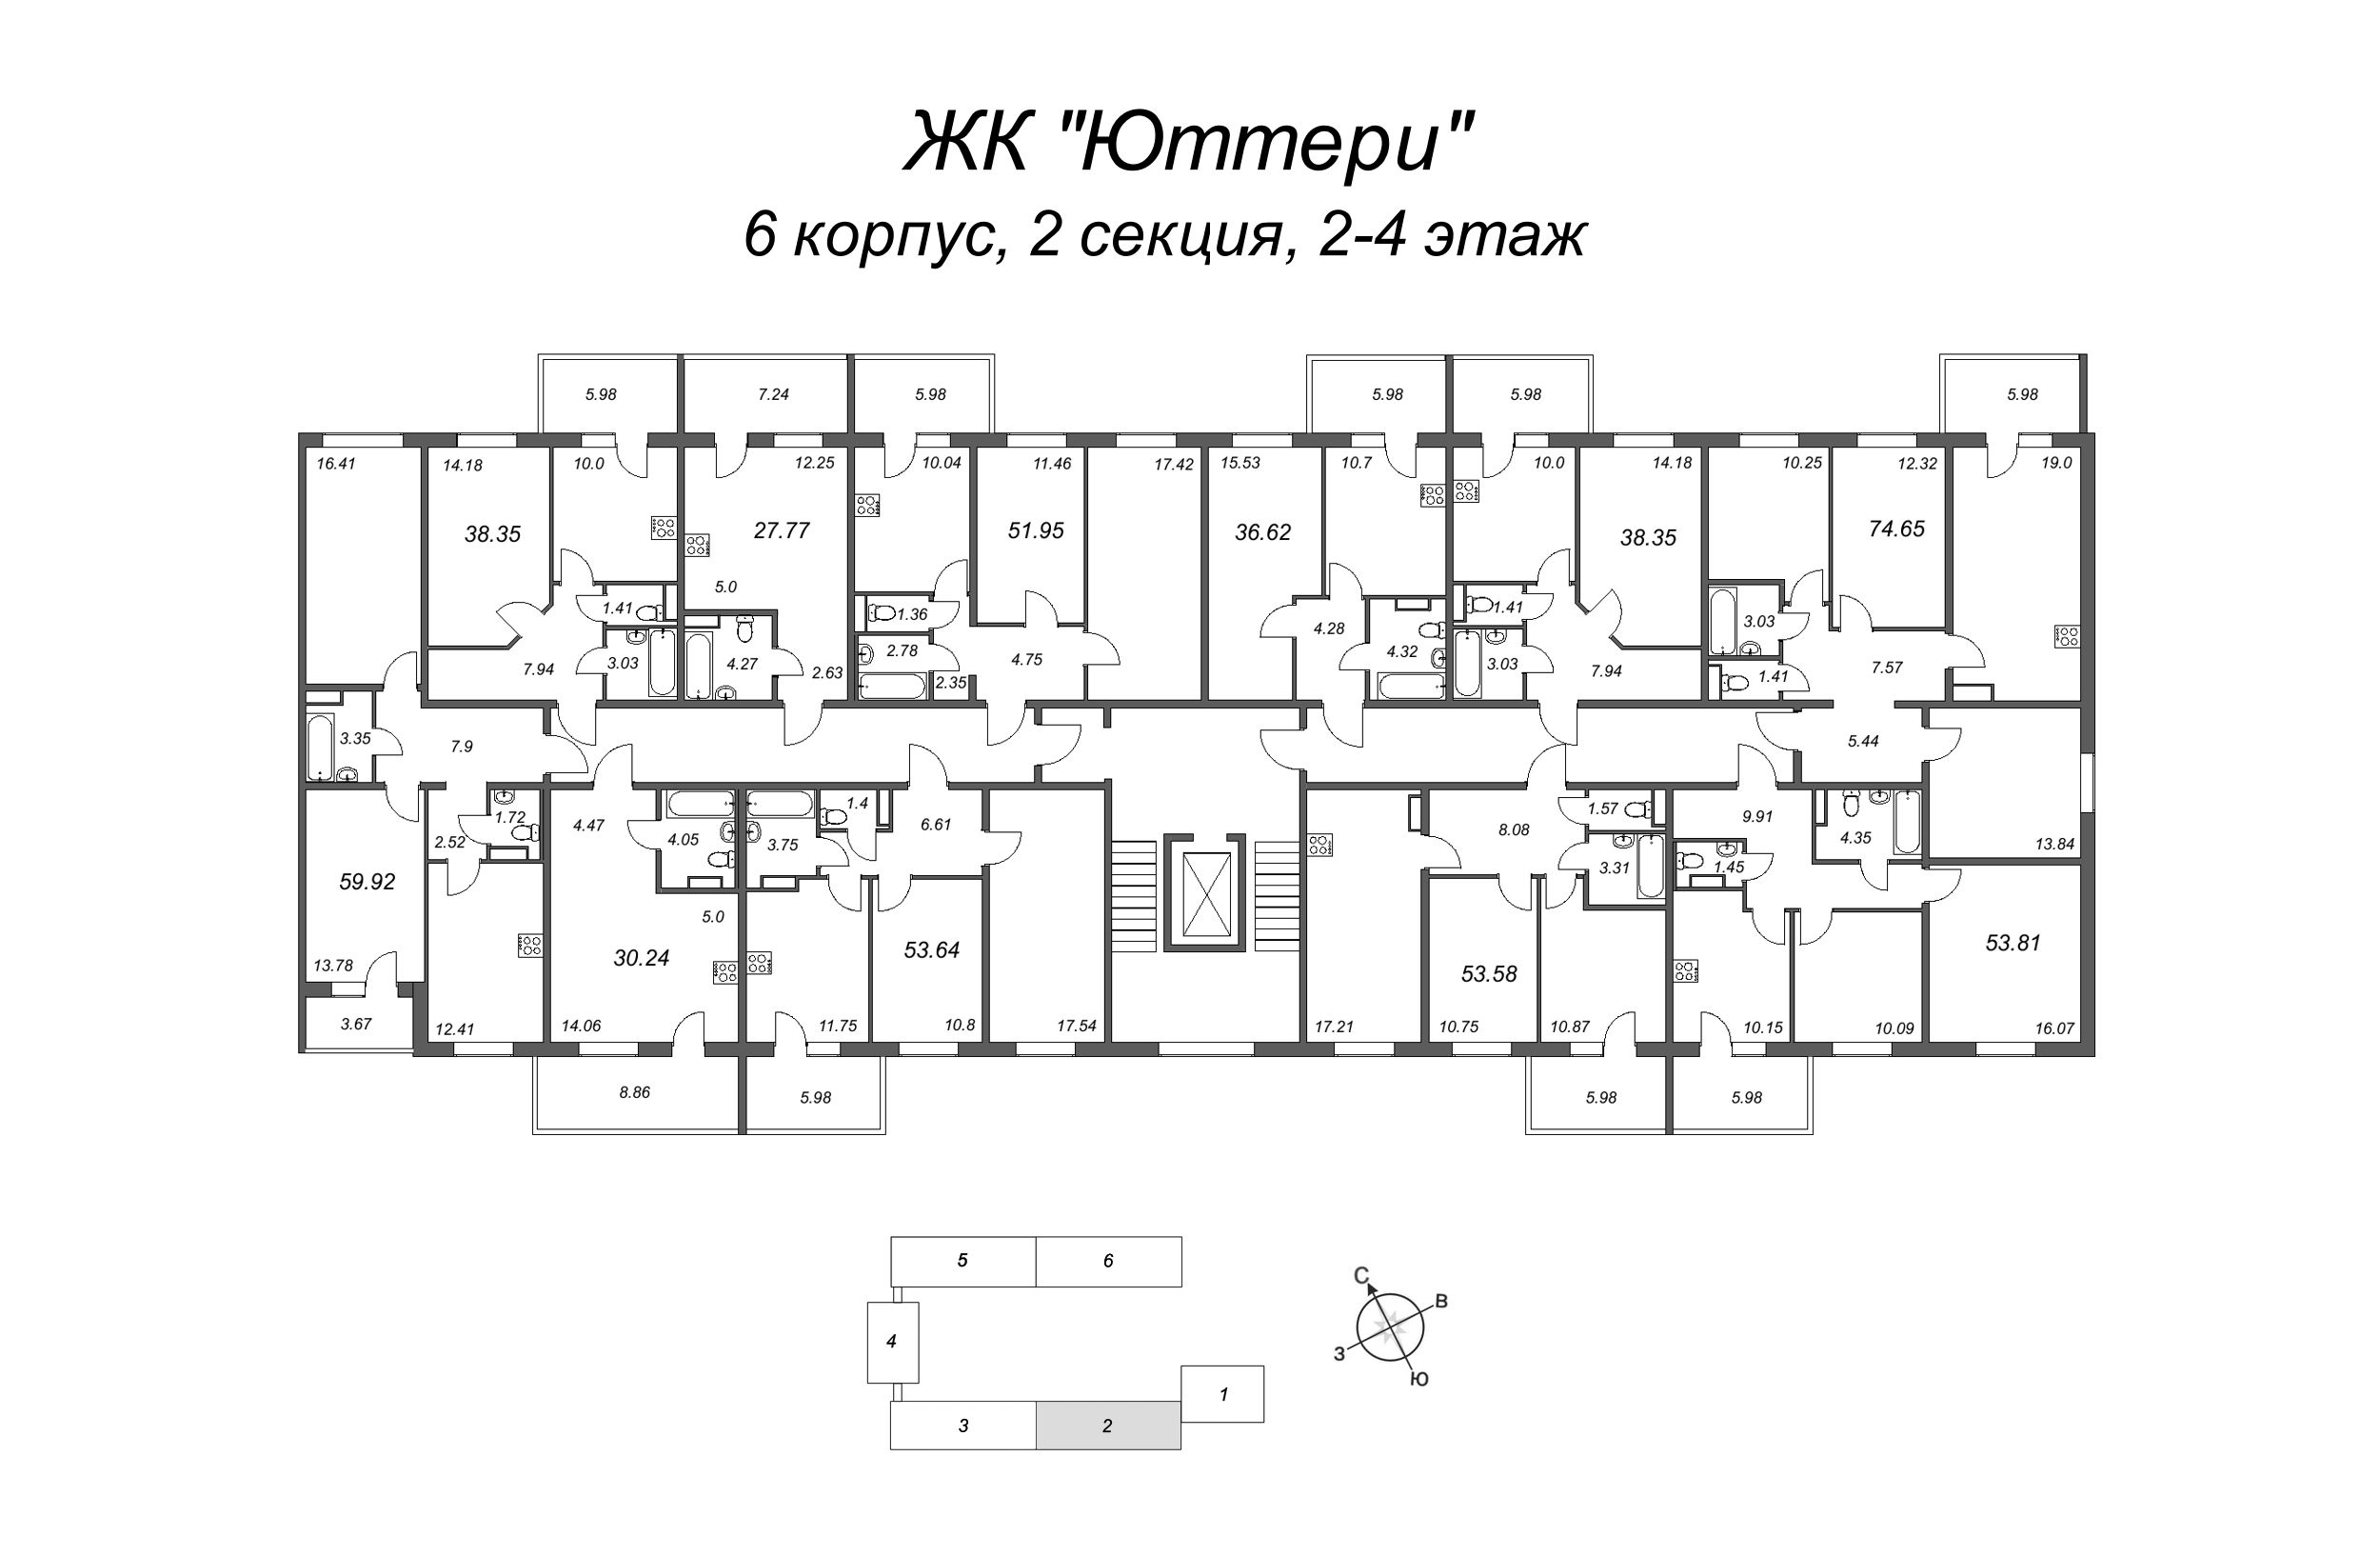 4-комнатная (Евро) квартира, 72.86 м² - планировка этажа